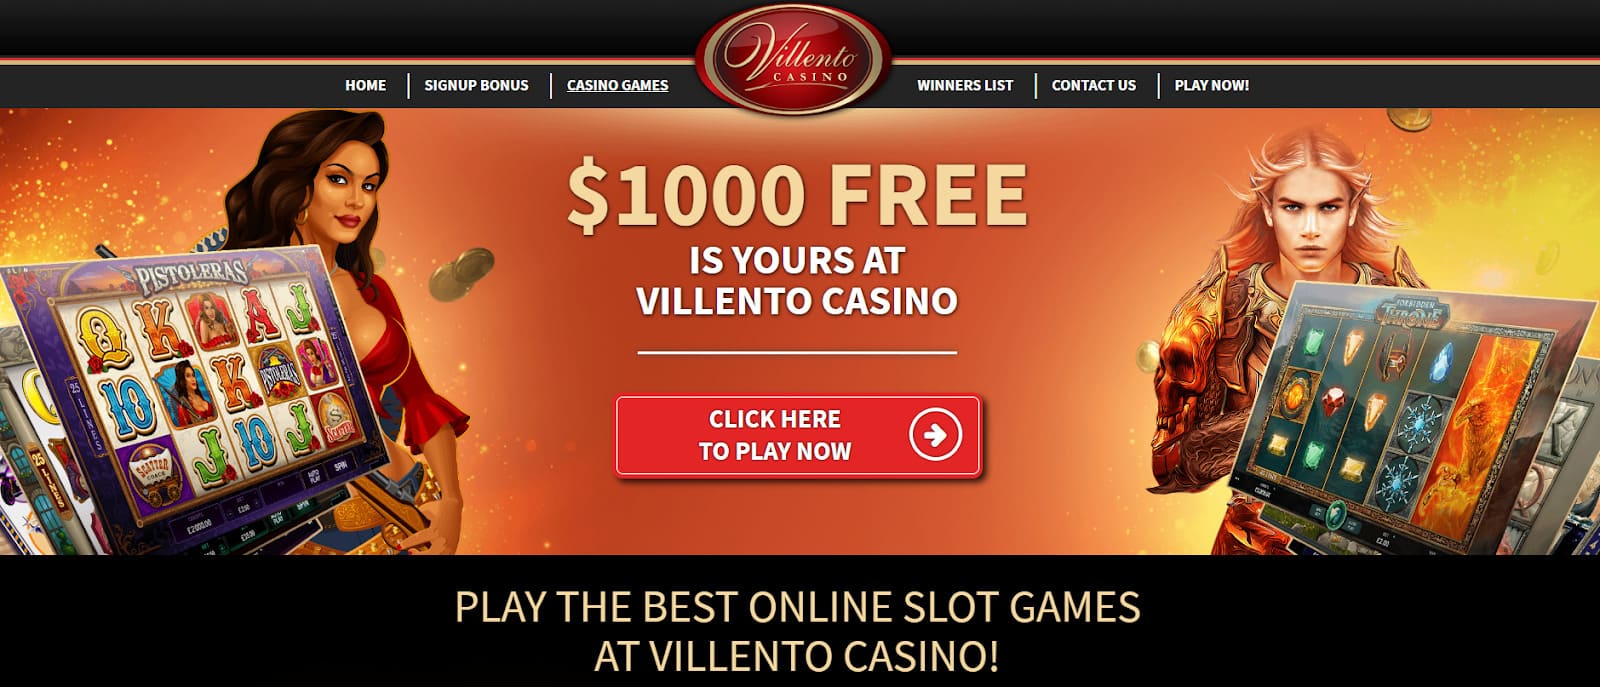 Villento Casino slots